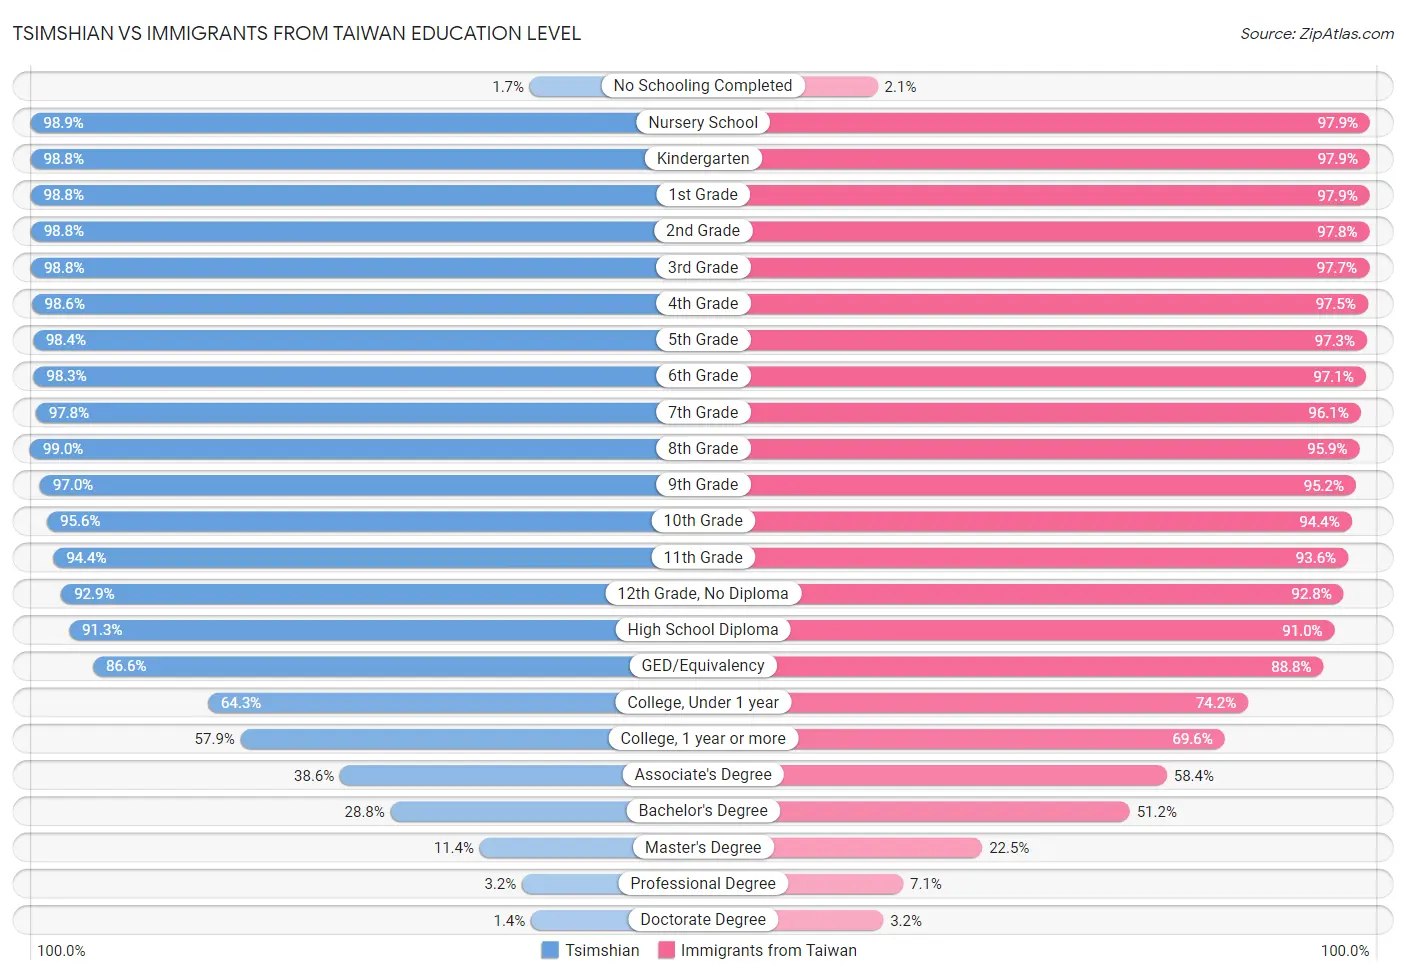 Tsimshian vs Immigrants from Taiwan Education Level